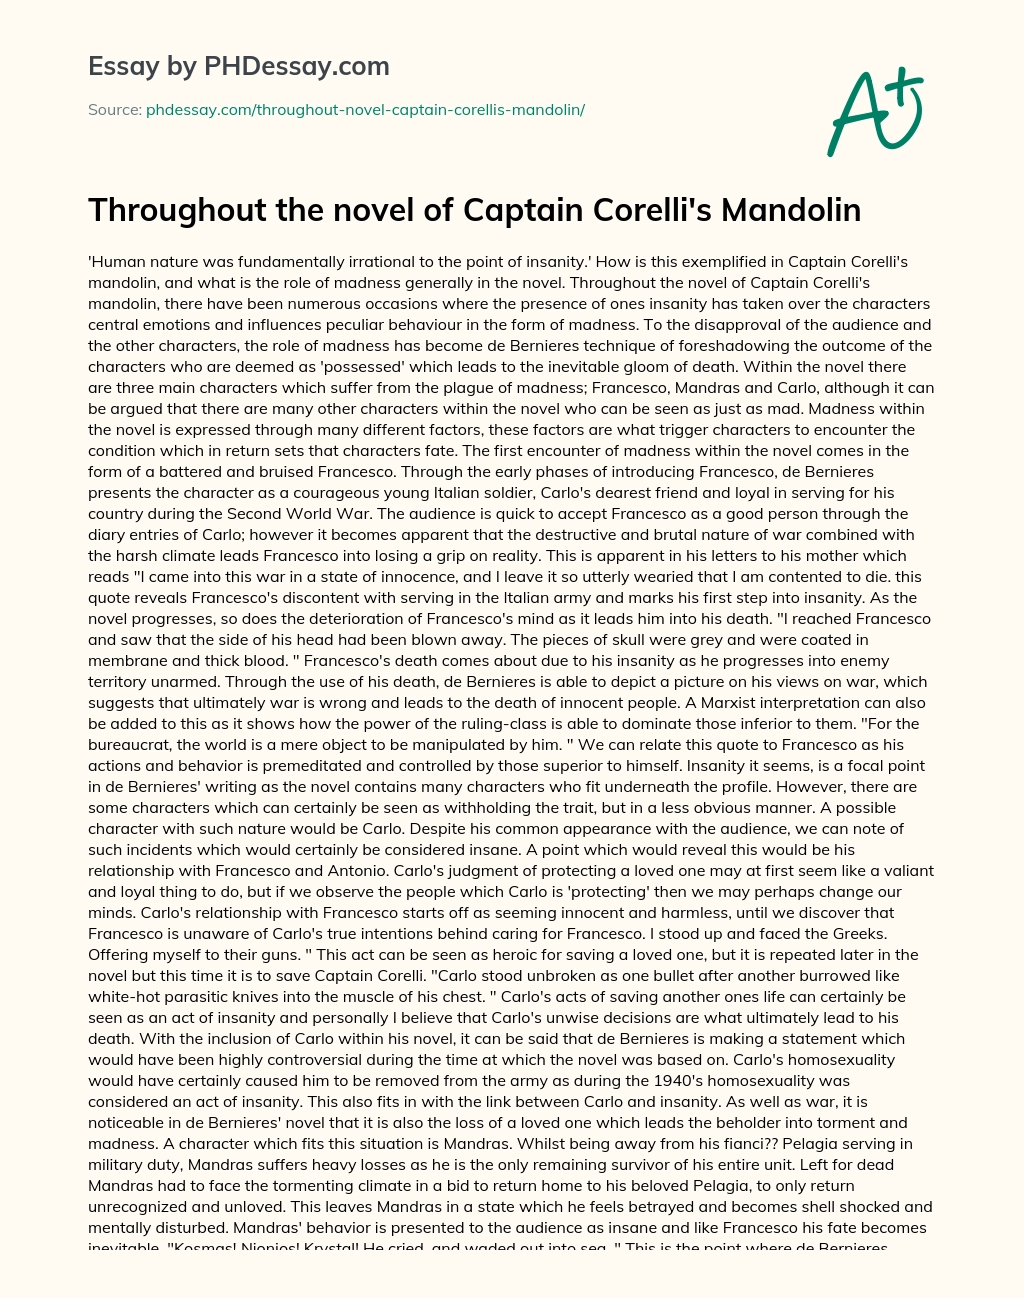 Throughout the novel of Captain Corelli’s Mandolin essay